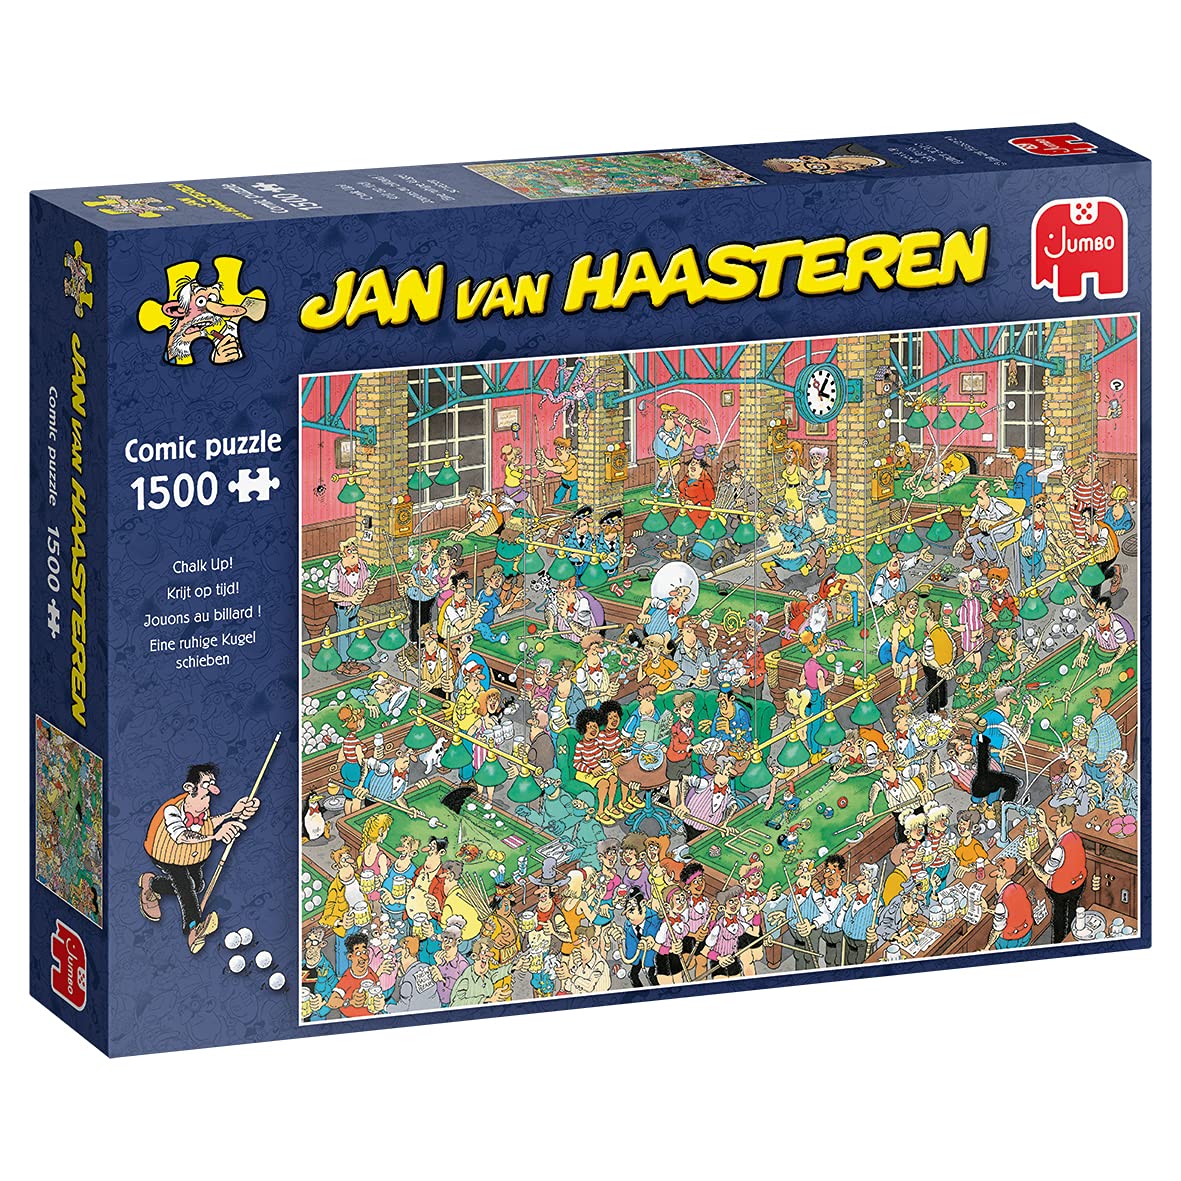 acheter Jumbo- Jan Van Haasteren Chalk Up-1500 Adultes-Espagnol-Puzzle 1500 pièces, 20026, Multicolore o8qbieWTP meilleure vente